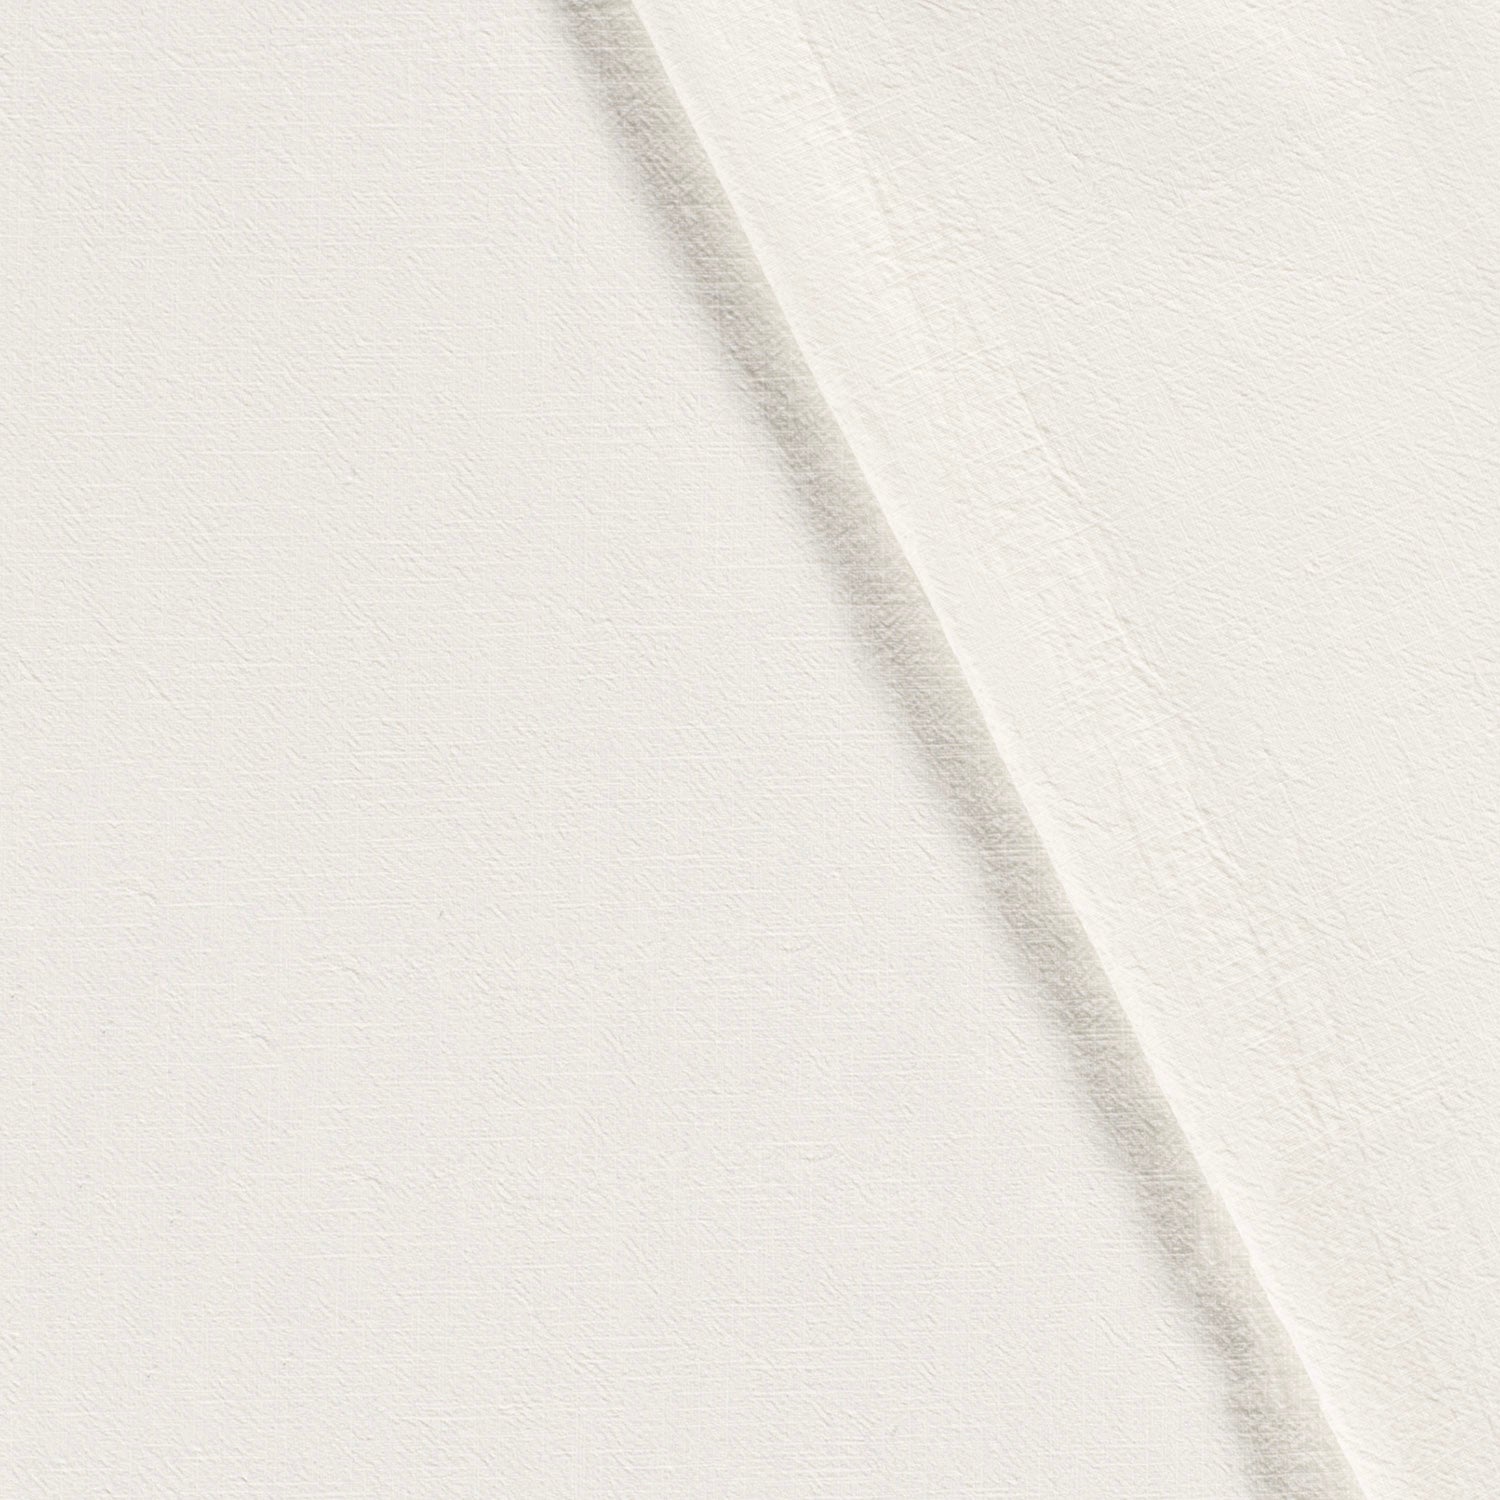 Telpes telas - Tul fino blanco roto 3m.